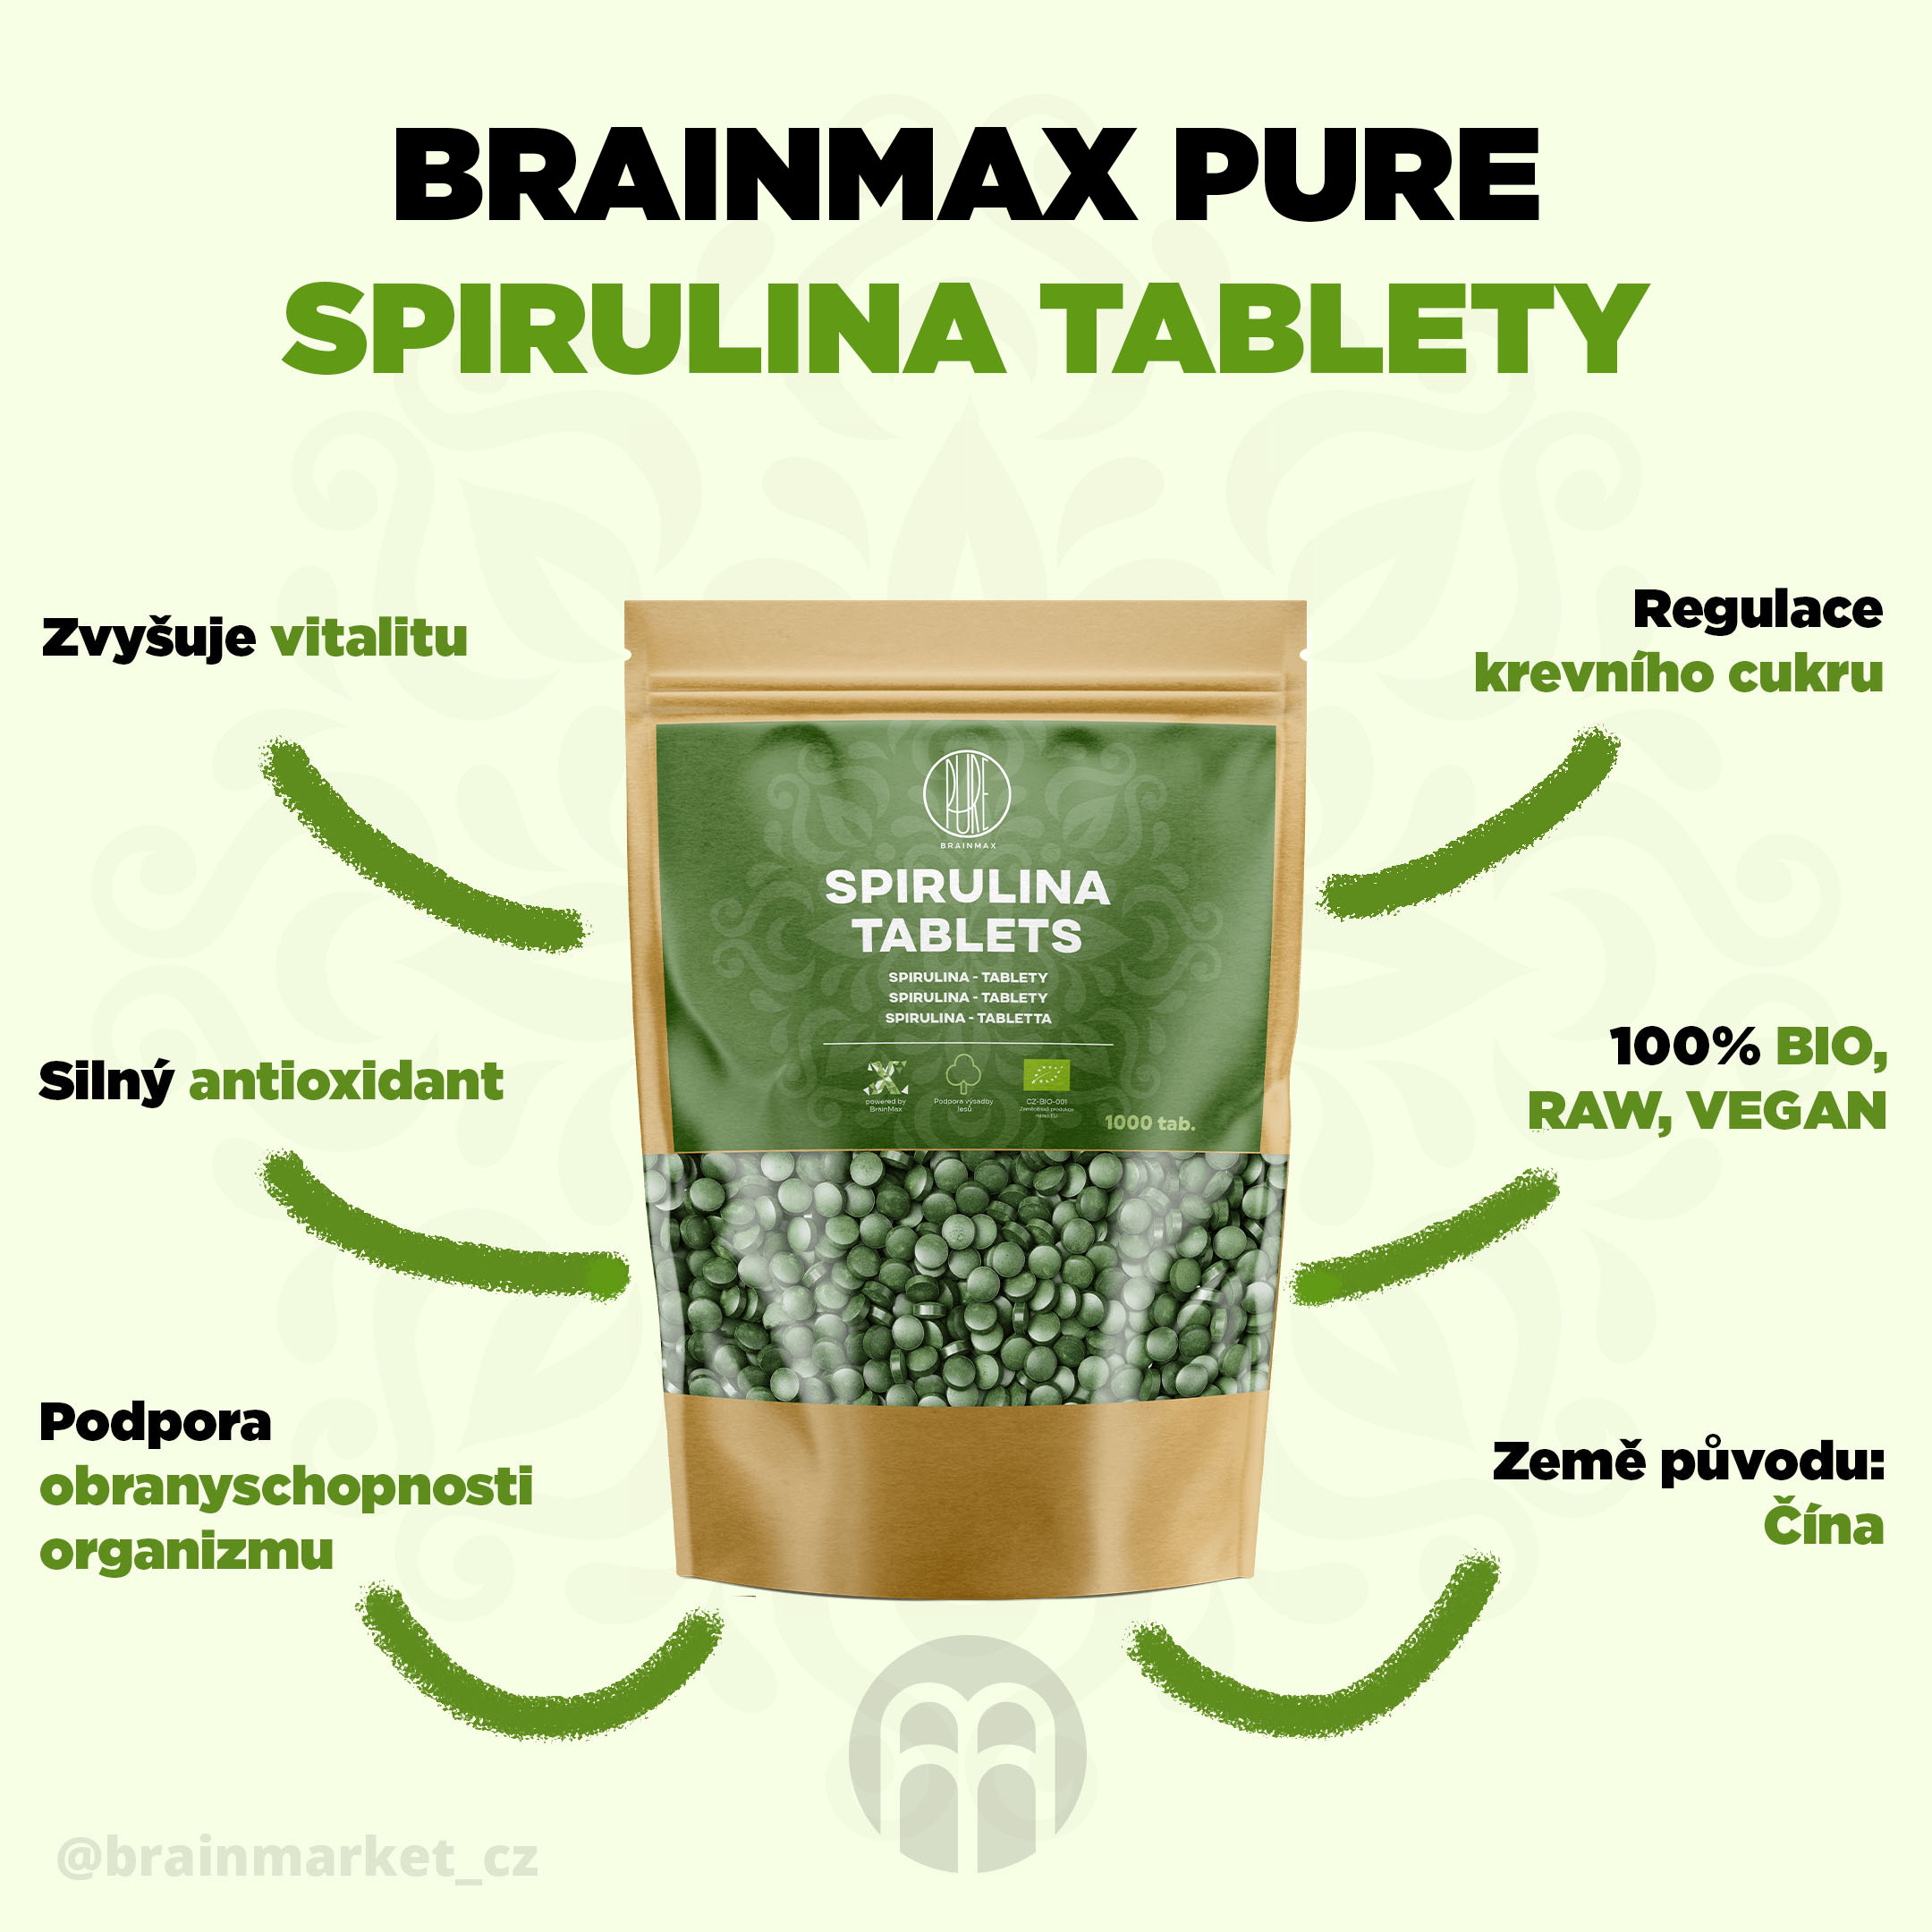 Brainmax pure spirulina infografika brainmarket CZ (1)